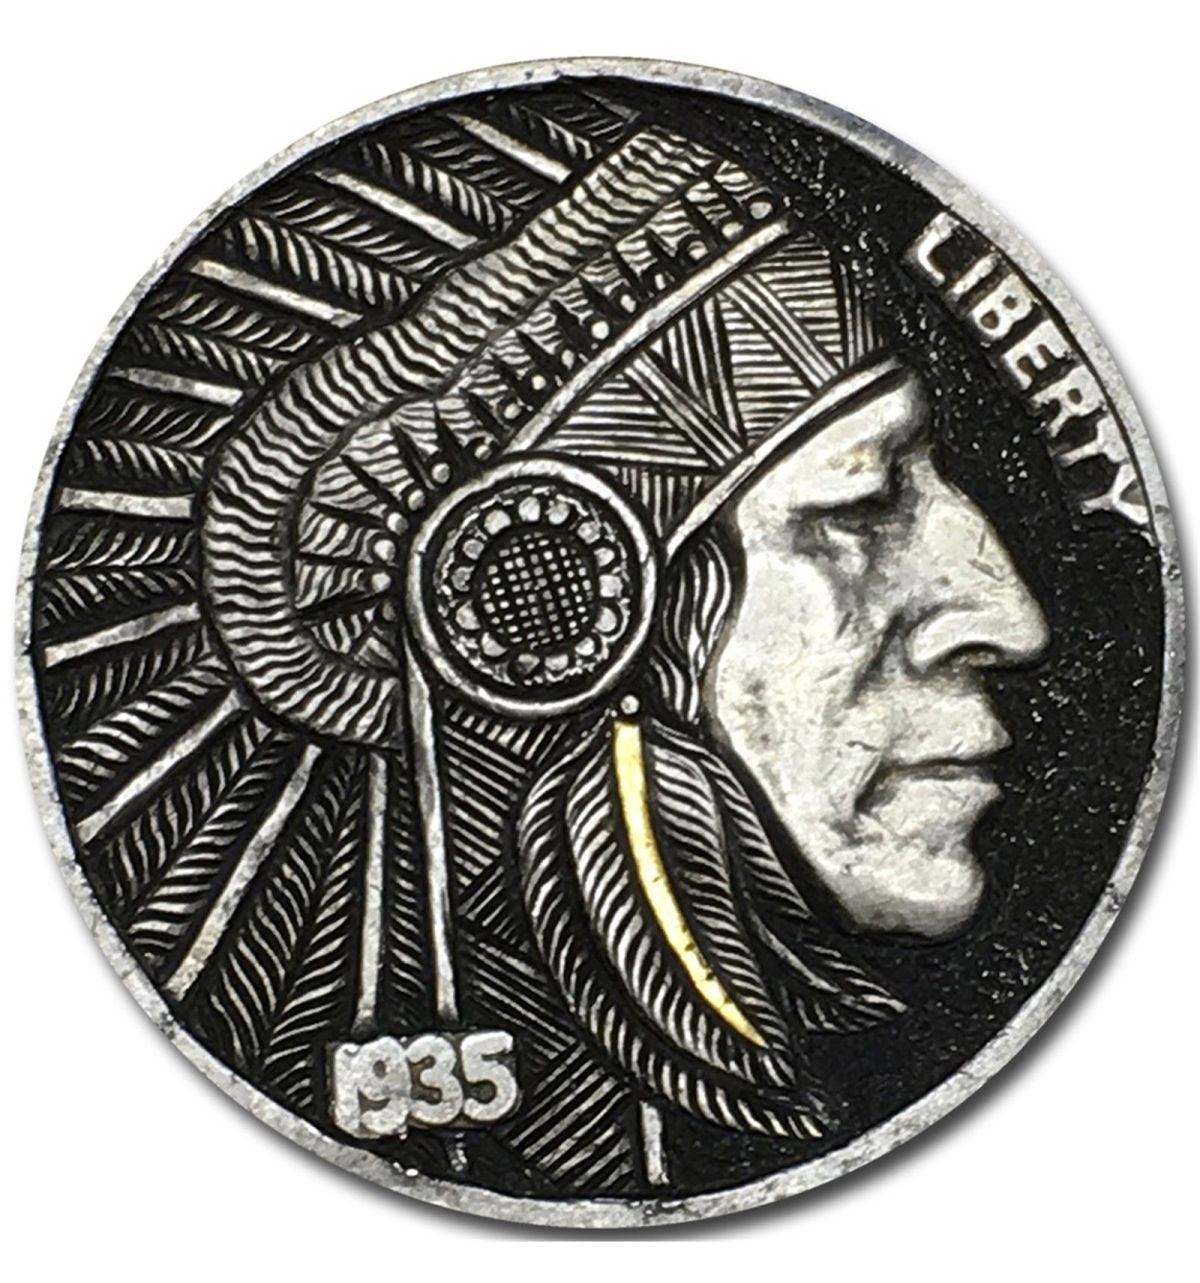 hobo nickel coin sculpture engraving bas relief